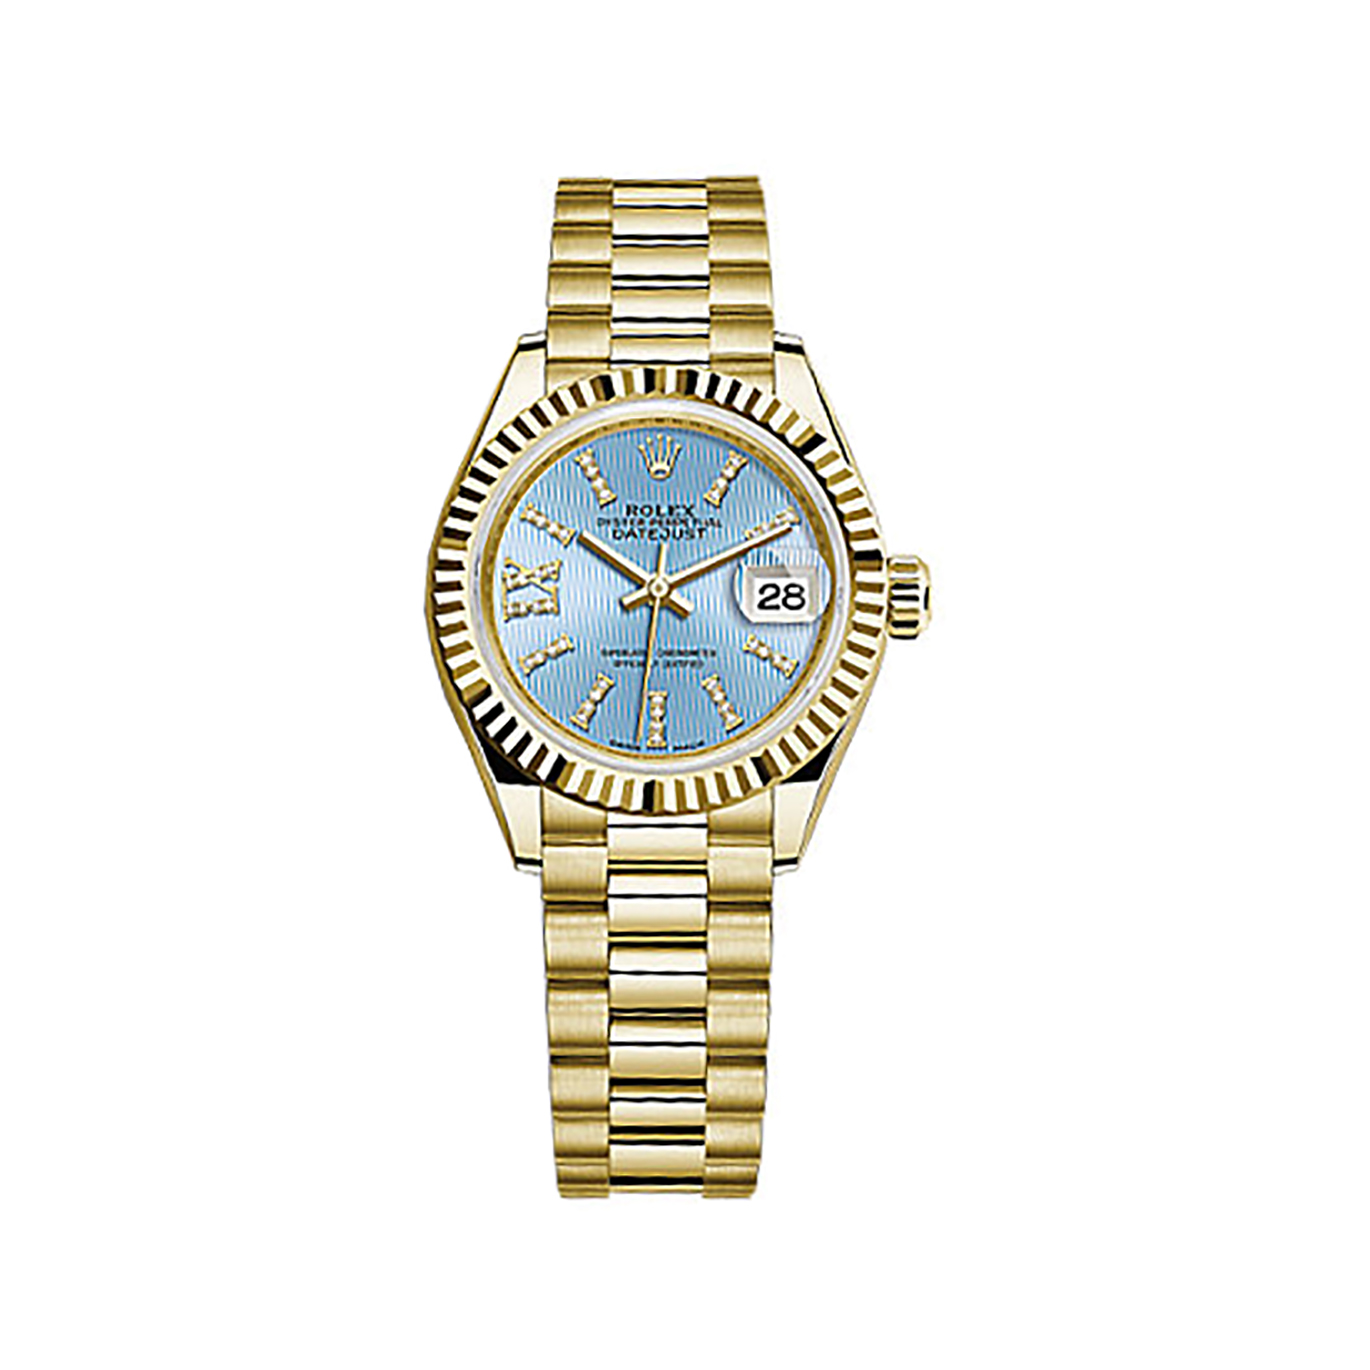 Lady-Datejust 28 279178 Gold Watch (Cornflower Blue Set with Diamonds)